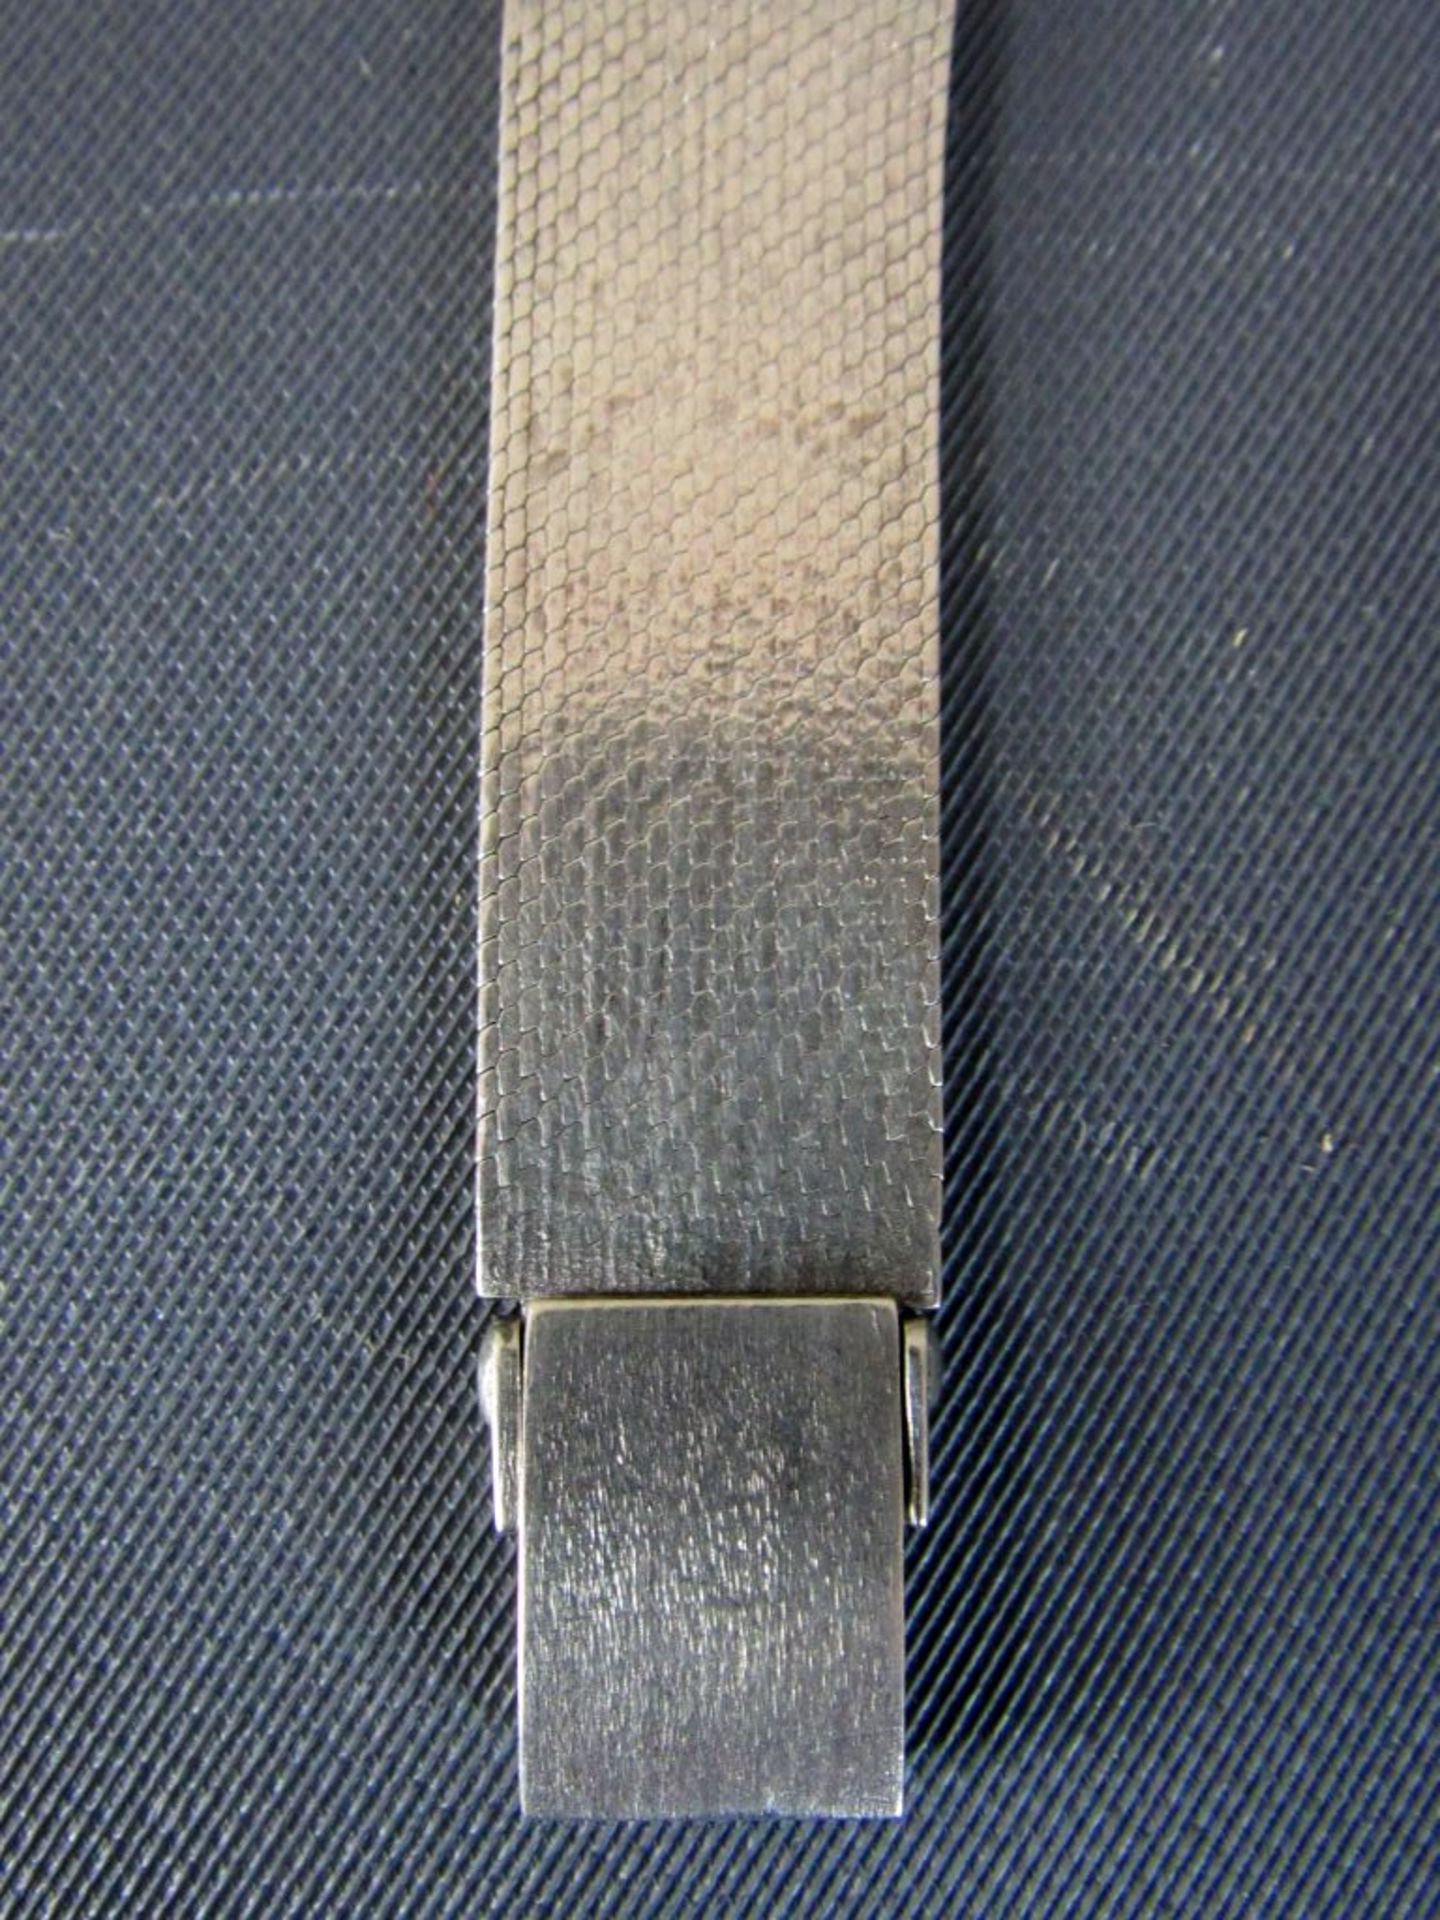 Damen Uhr 800er Silber Morago läuft an - Image 4 of 10